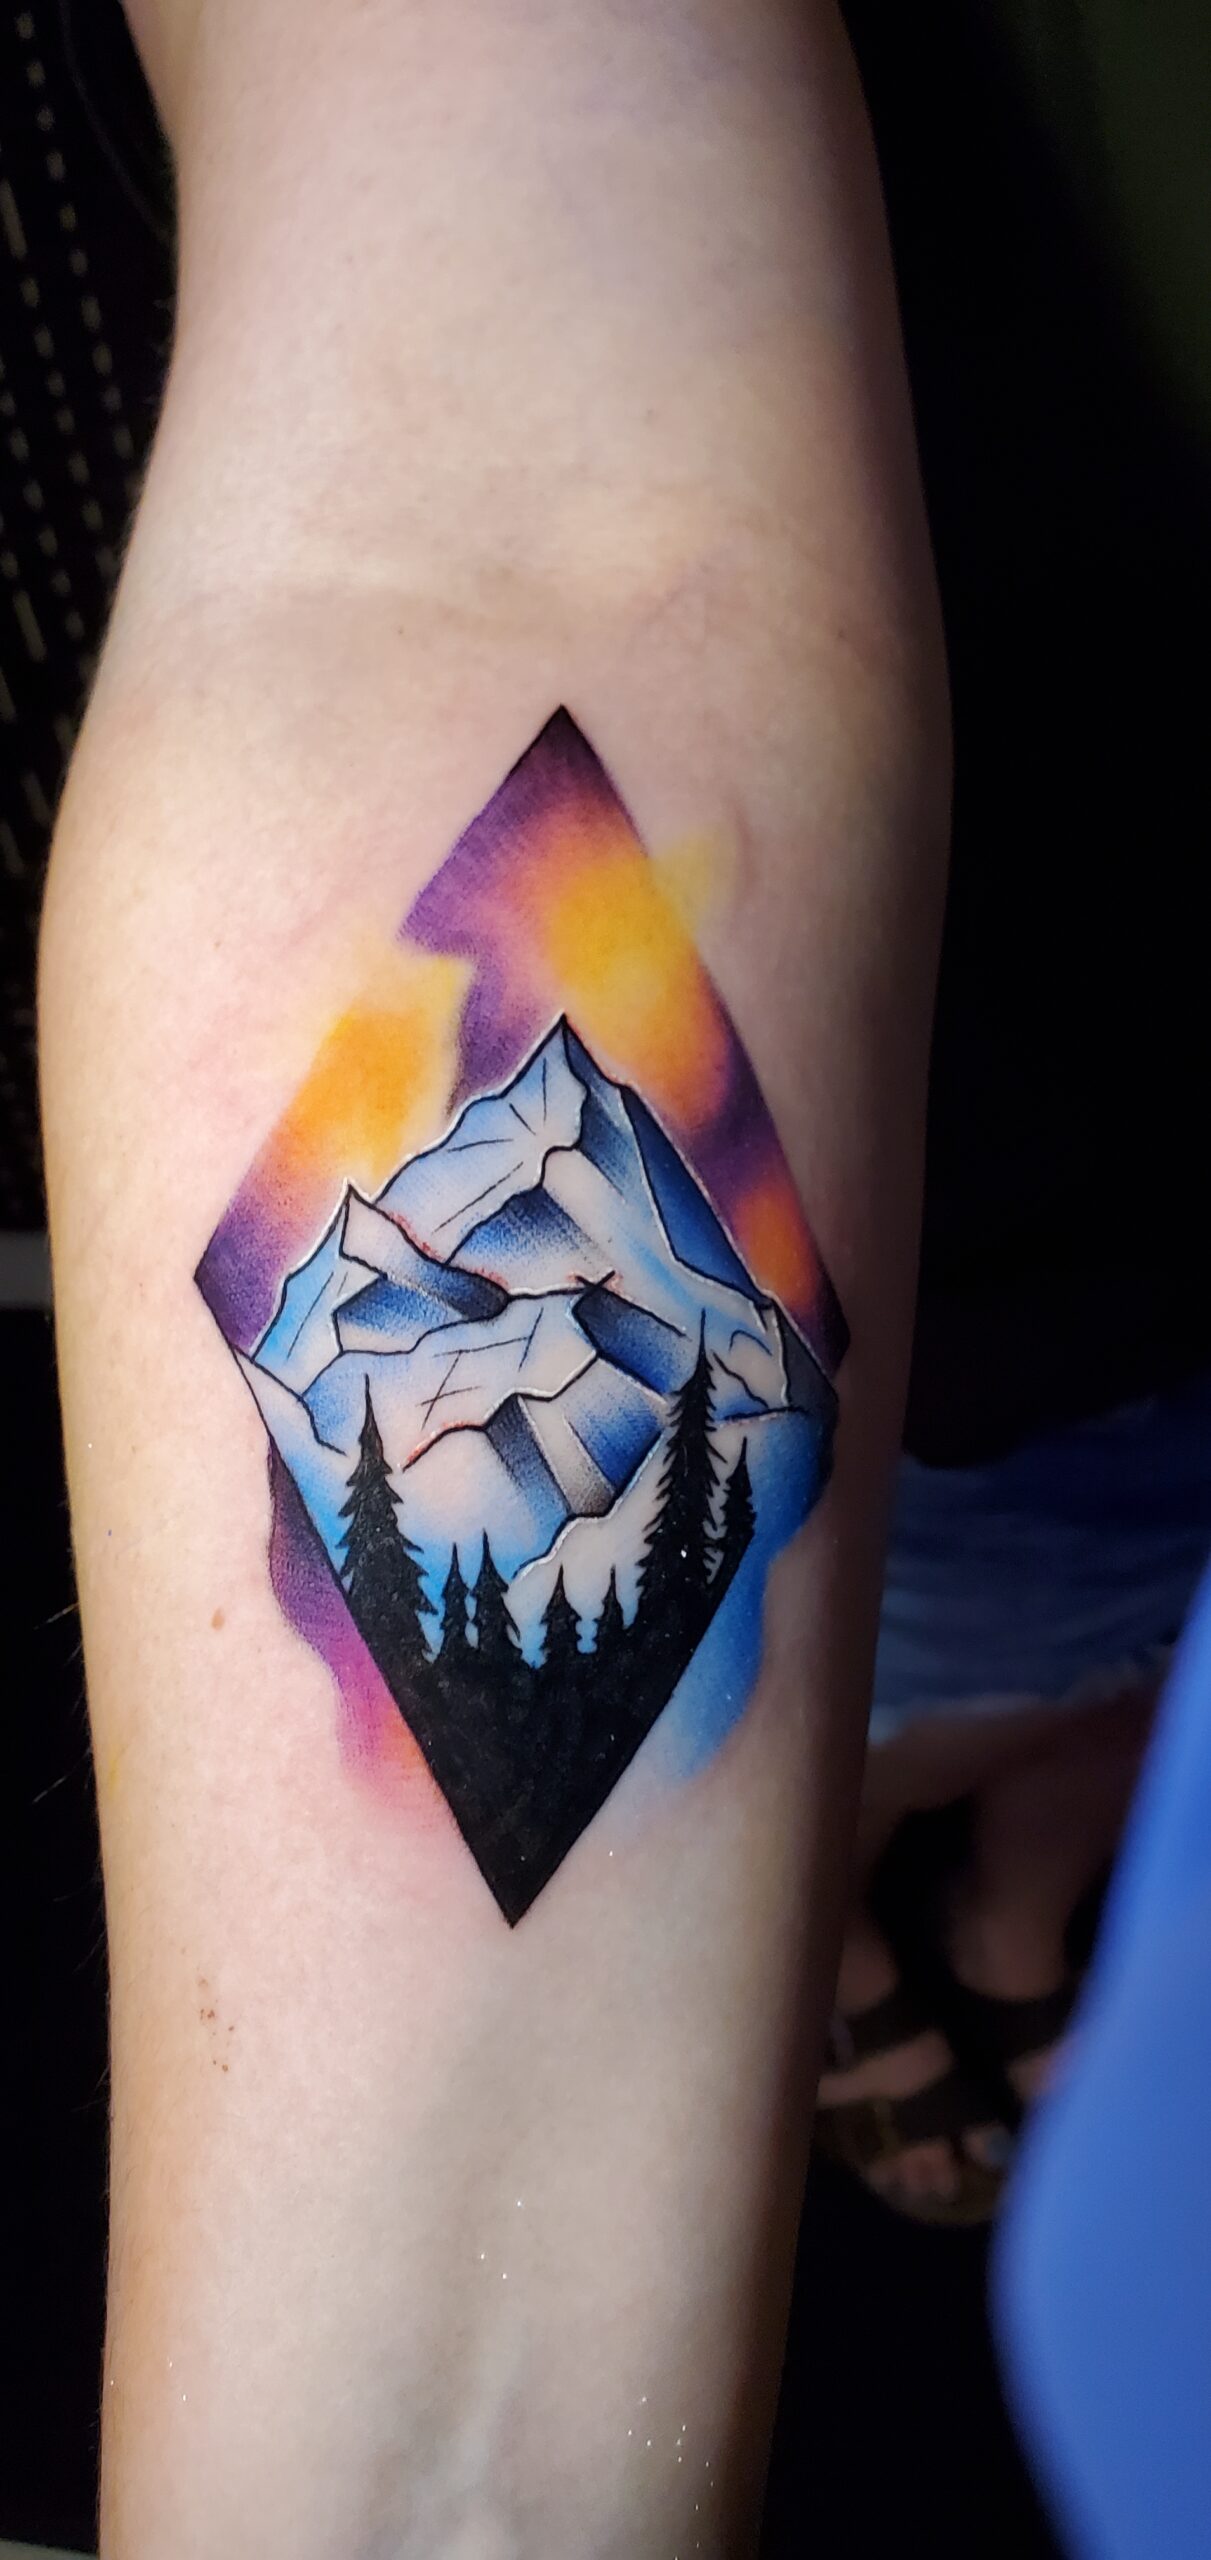 Mountain tattoo | emmatinghouterseu1985's Ownd